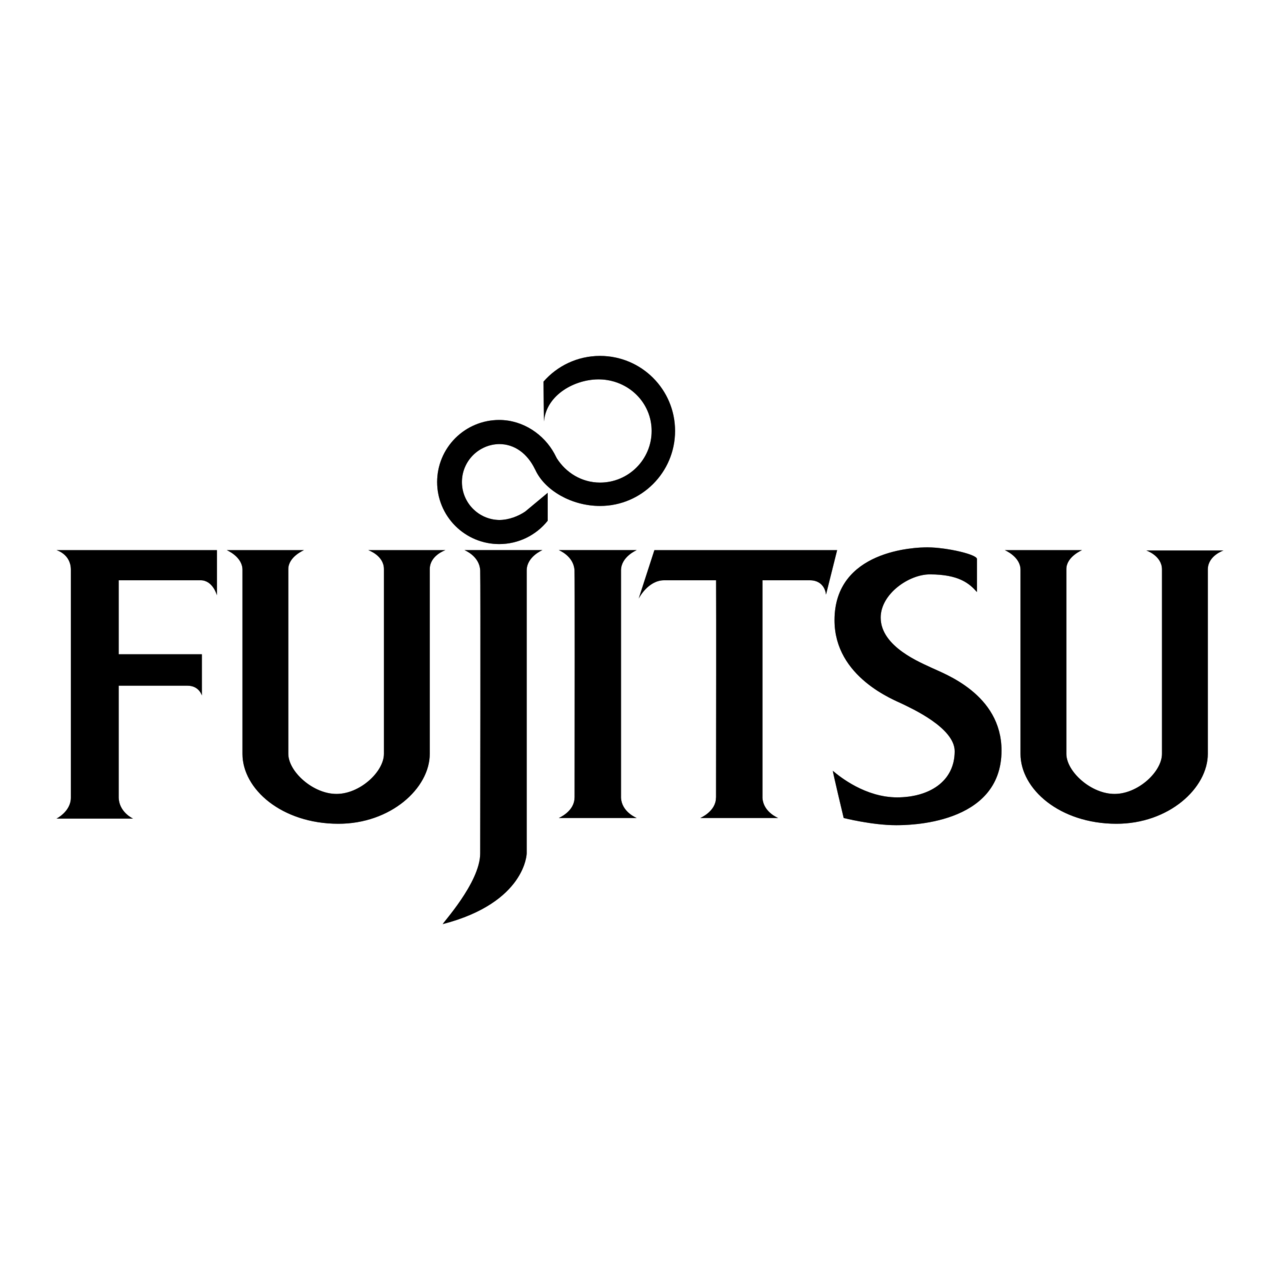 fujitsu-logo-black-and-white